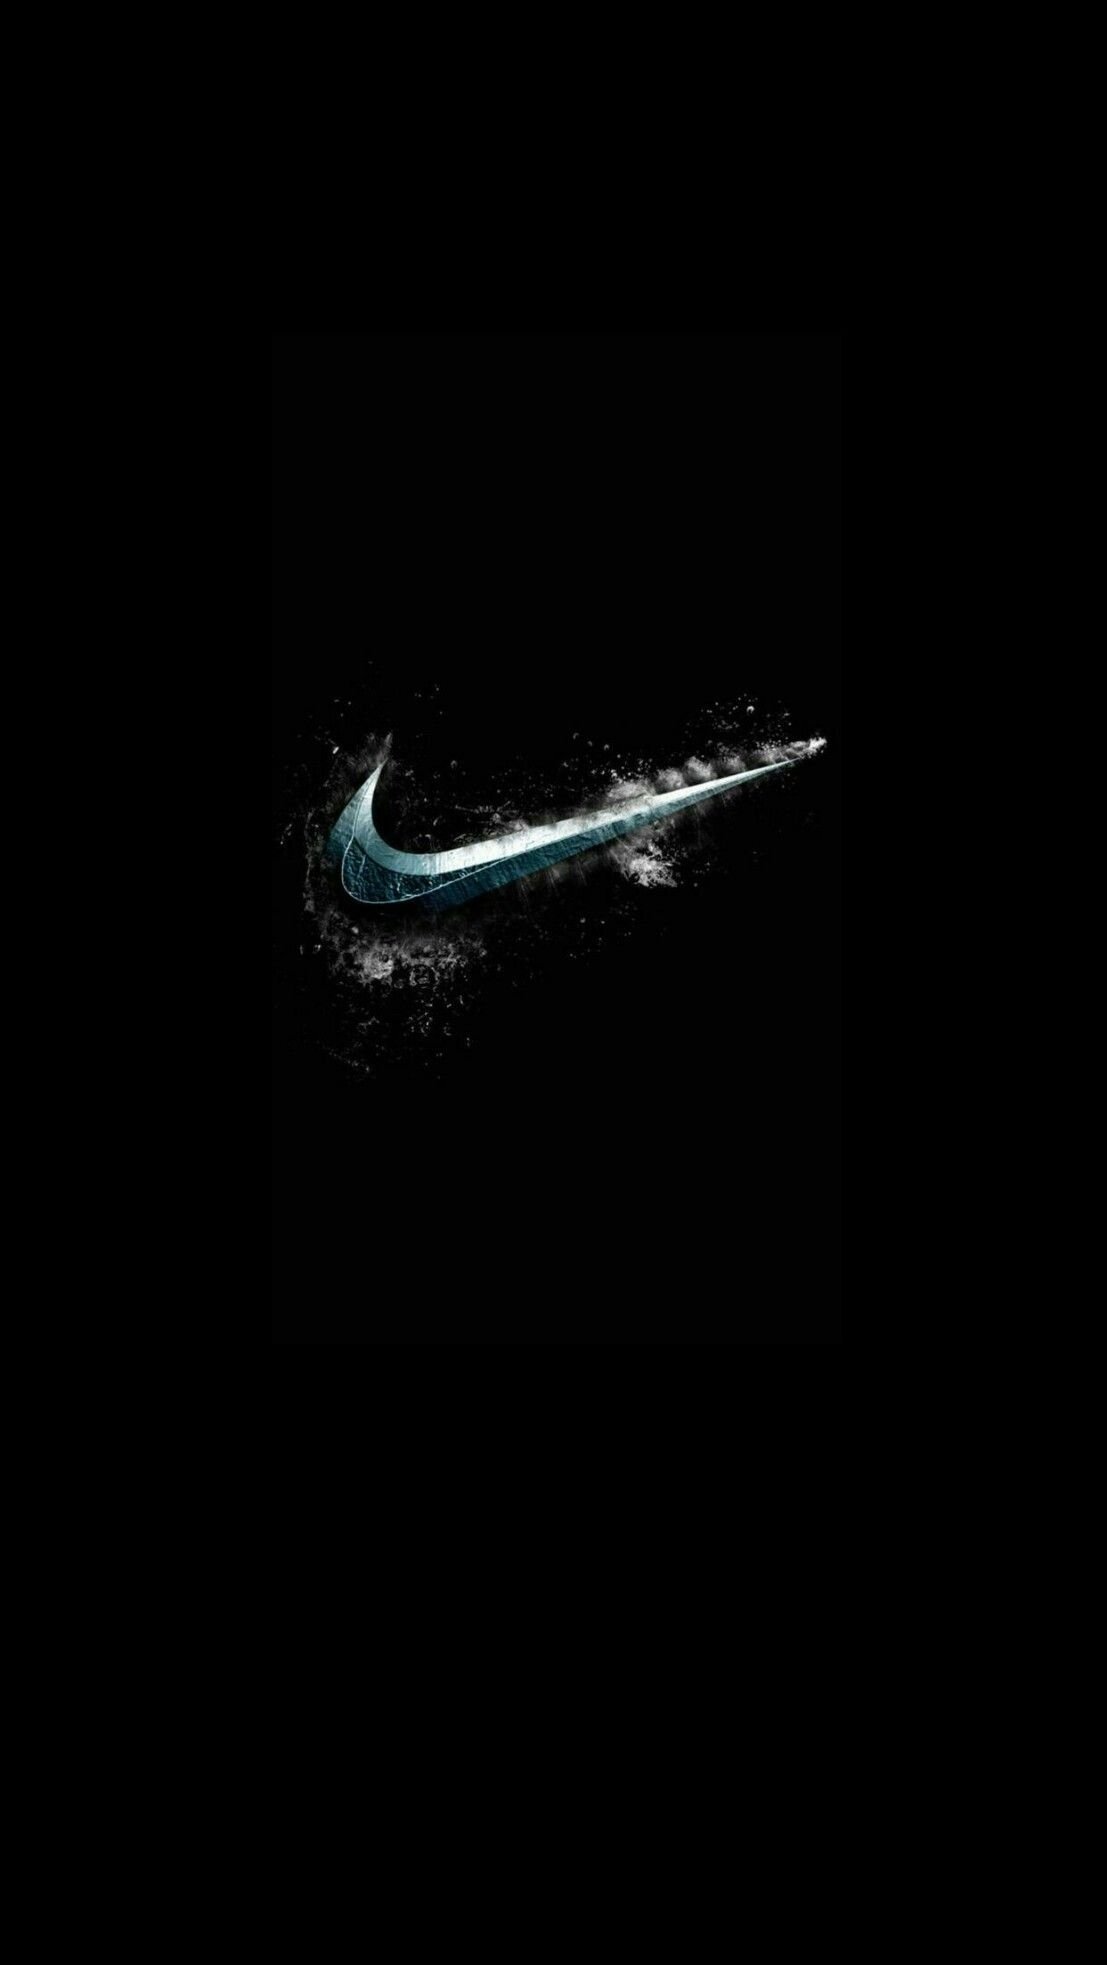 Nike Black iPhone Wallpaper